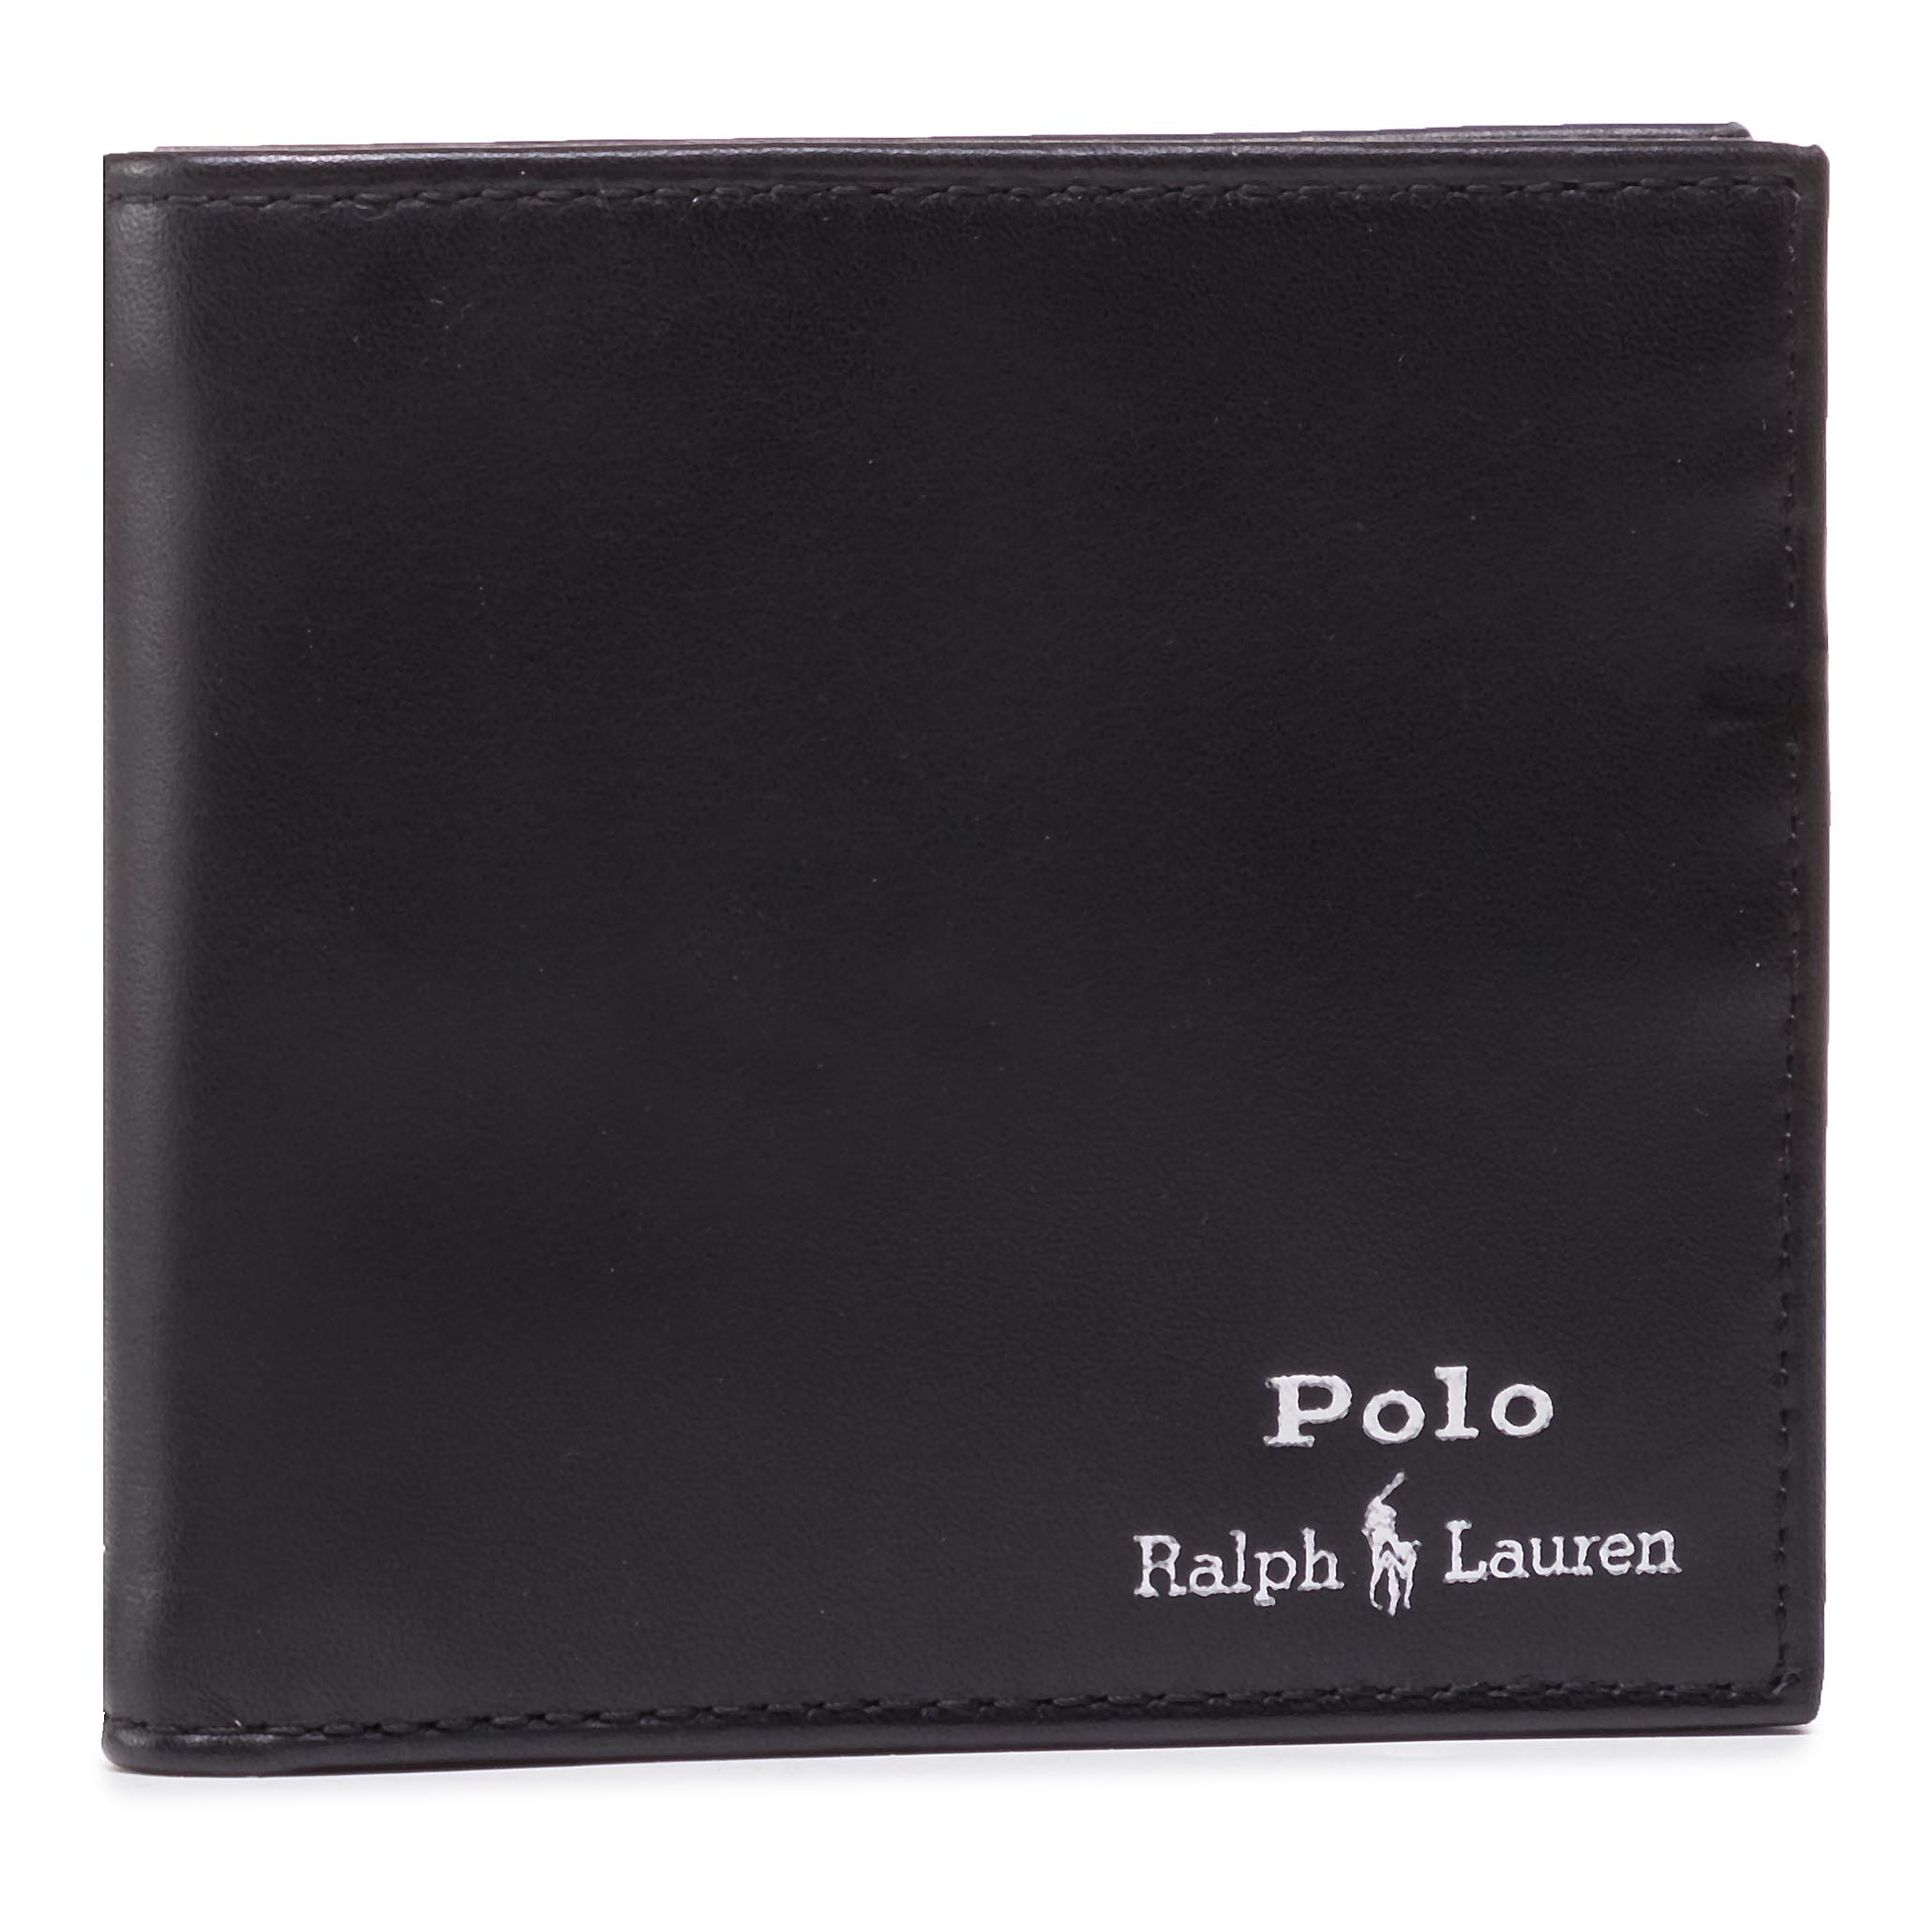 Duży Portfel Męski Polo Ralph Lauren Mpolo Co D2 405803866002 Black